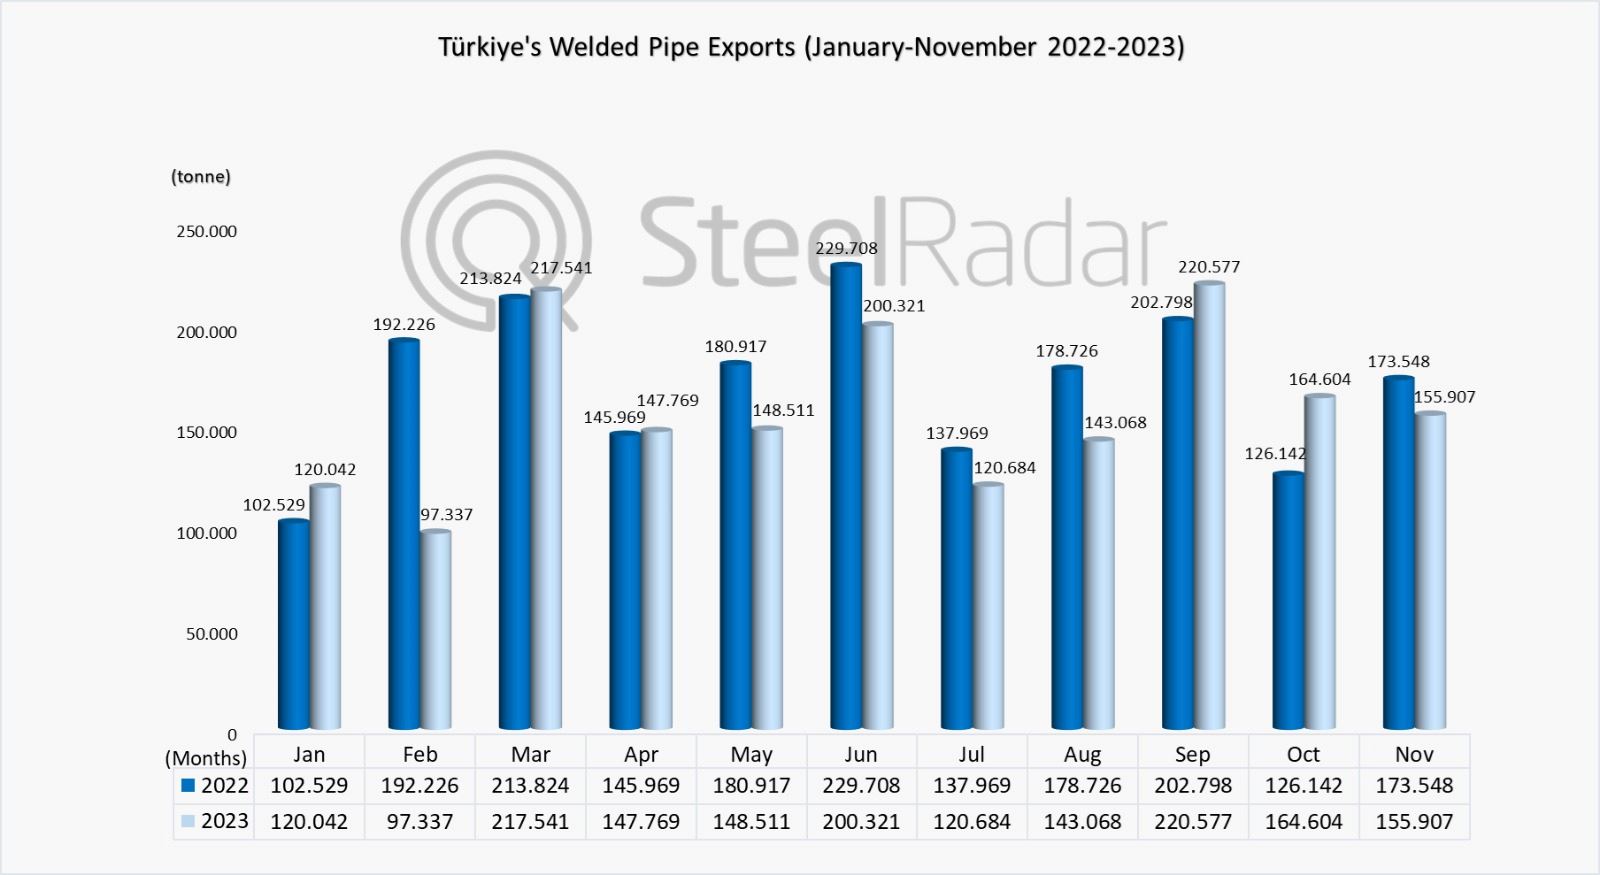 Türkiye's welded pipe exports decreased by 10.18% in November